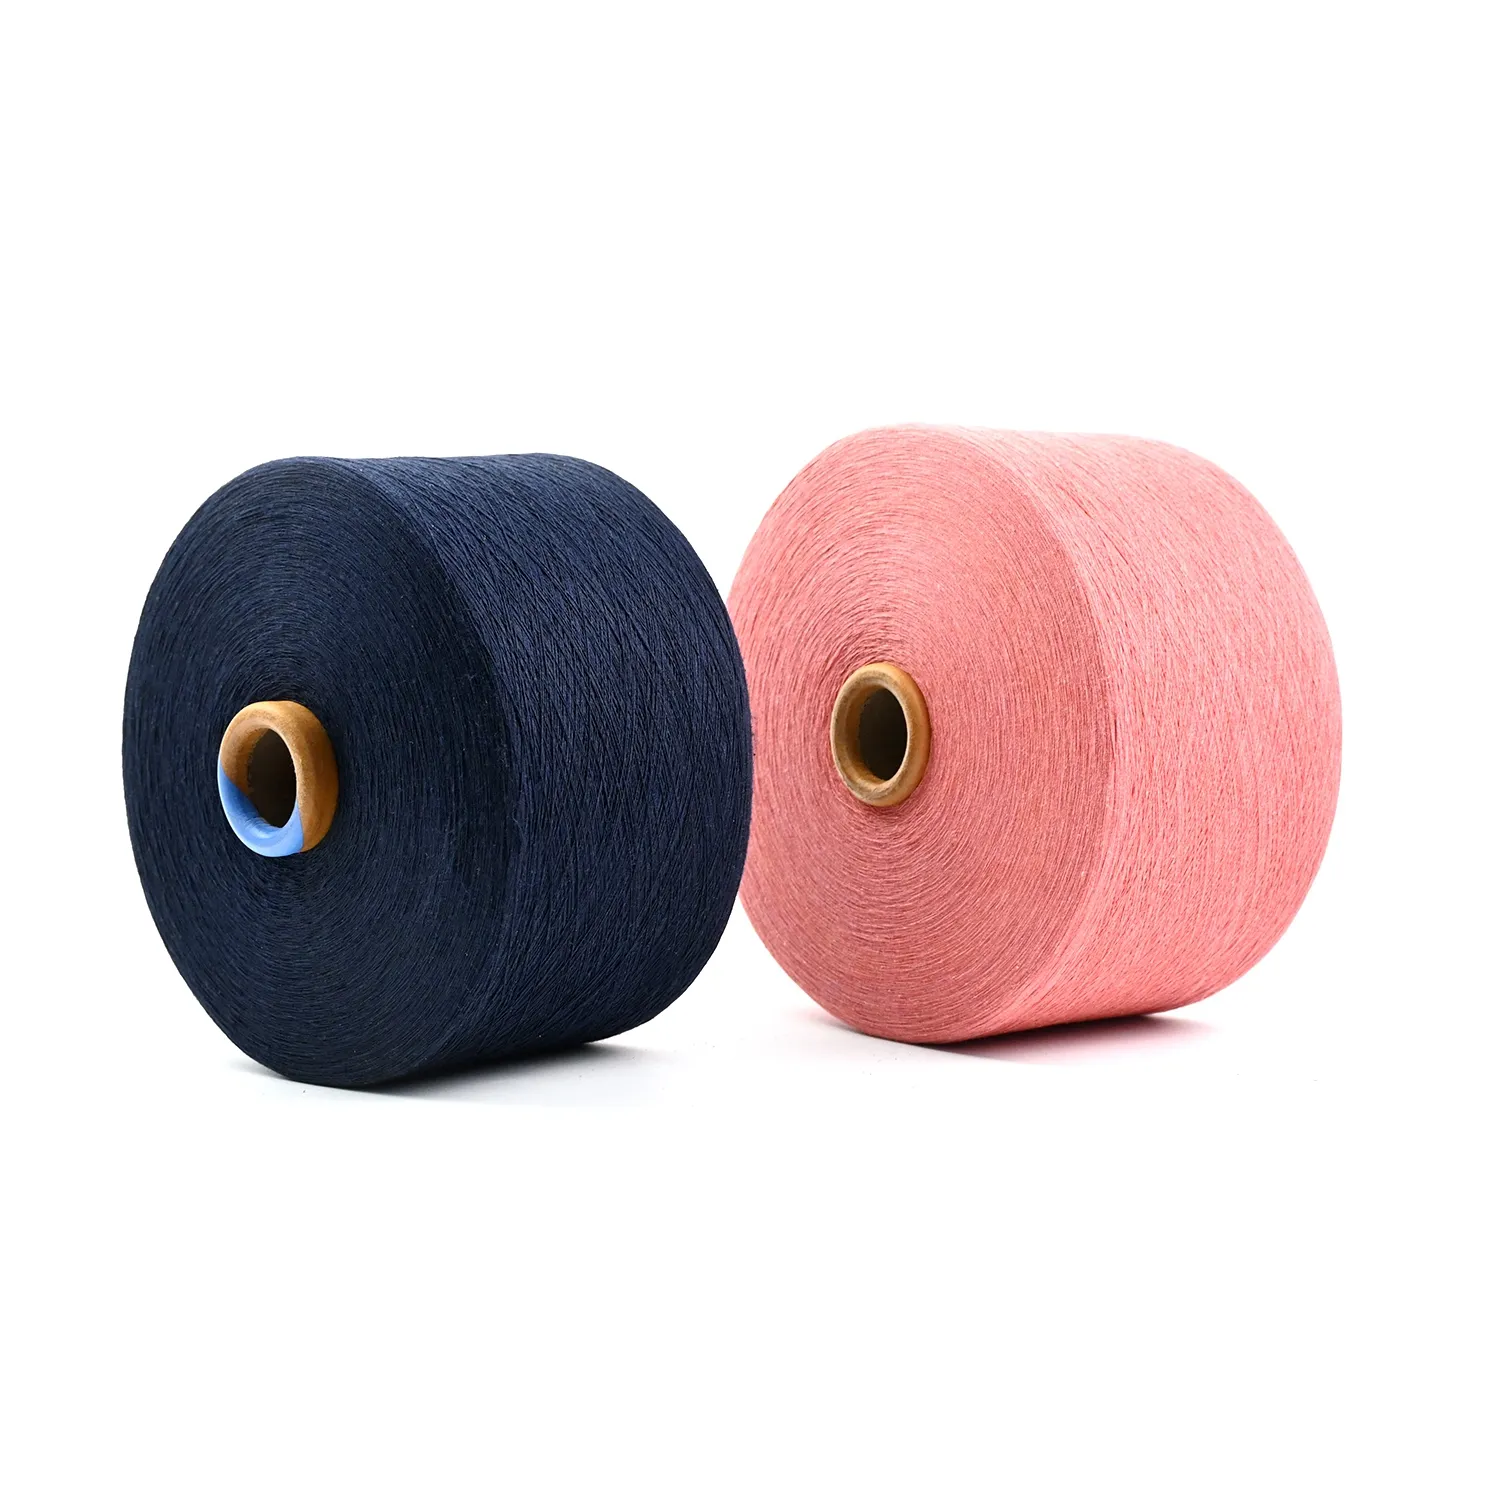 40% Cotton 60% Polyester Yarn Open End Weaving Ne 12/1 Combed Cotton Polyester Yarn